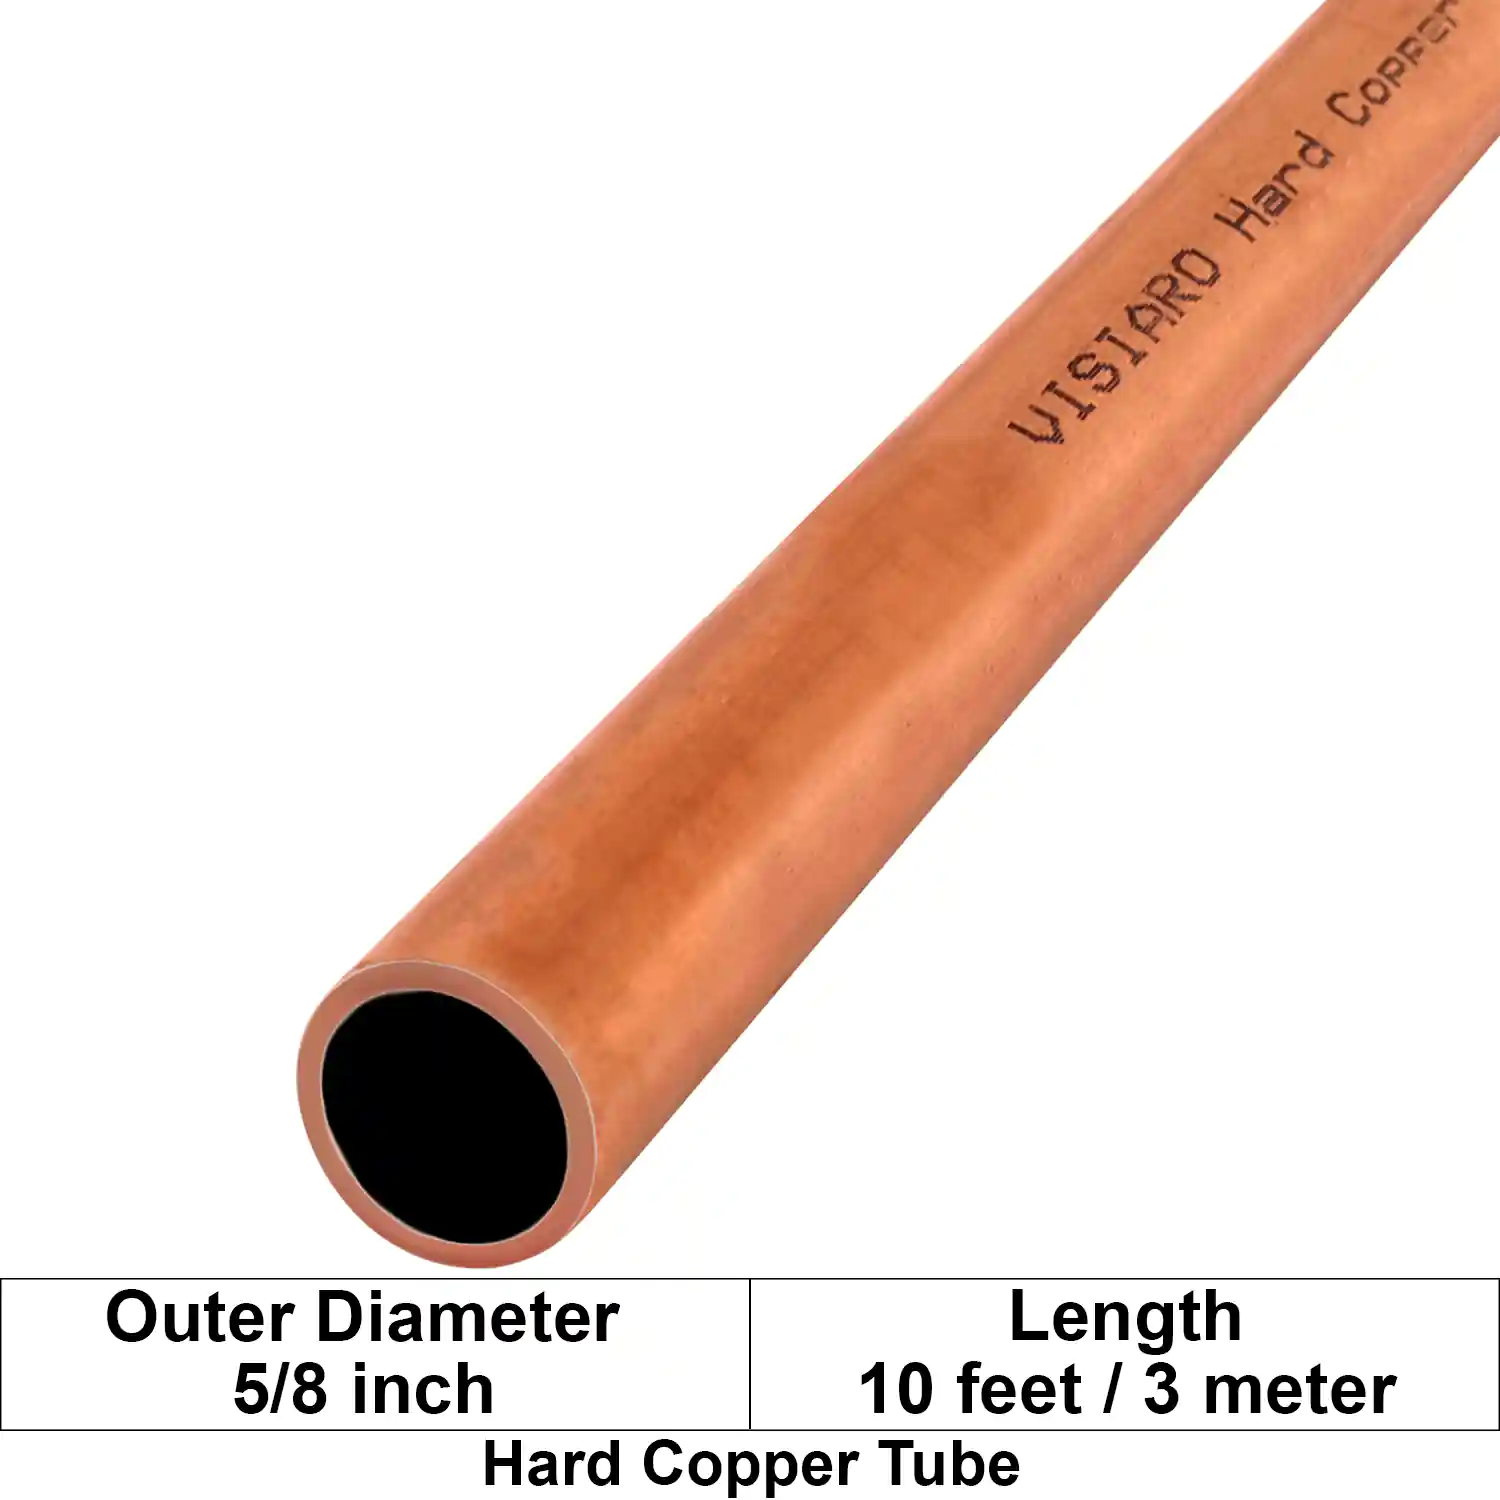 Visiaro Hard Copper Tube 10ft long Outer Diameter - 5/8 inch